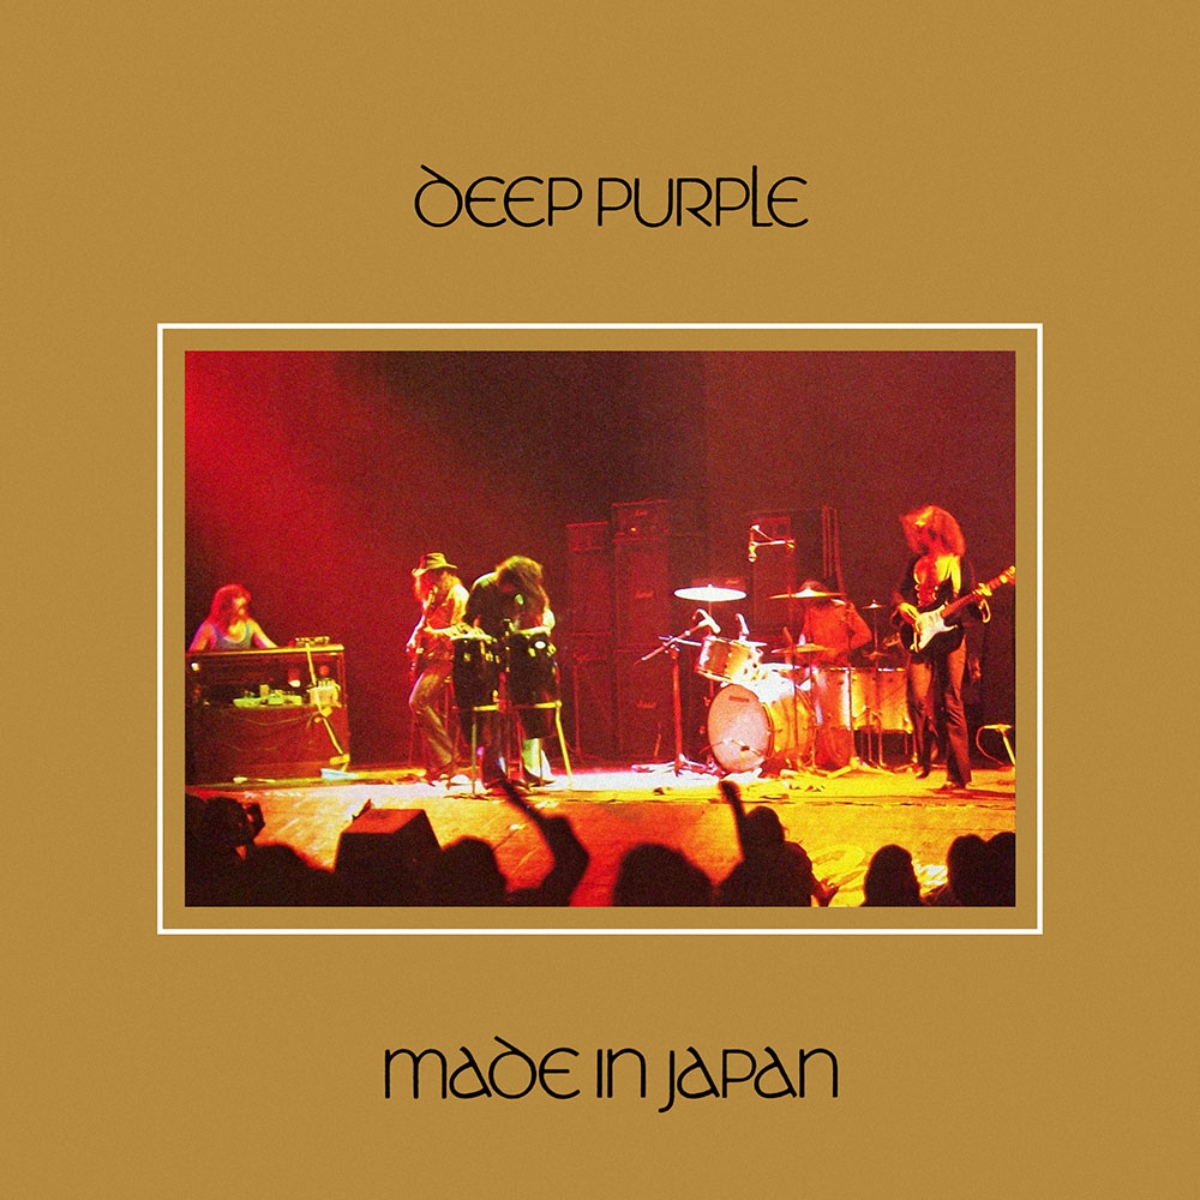 Deep Purple – «Made in Japan» (обложка альбома)